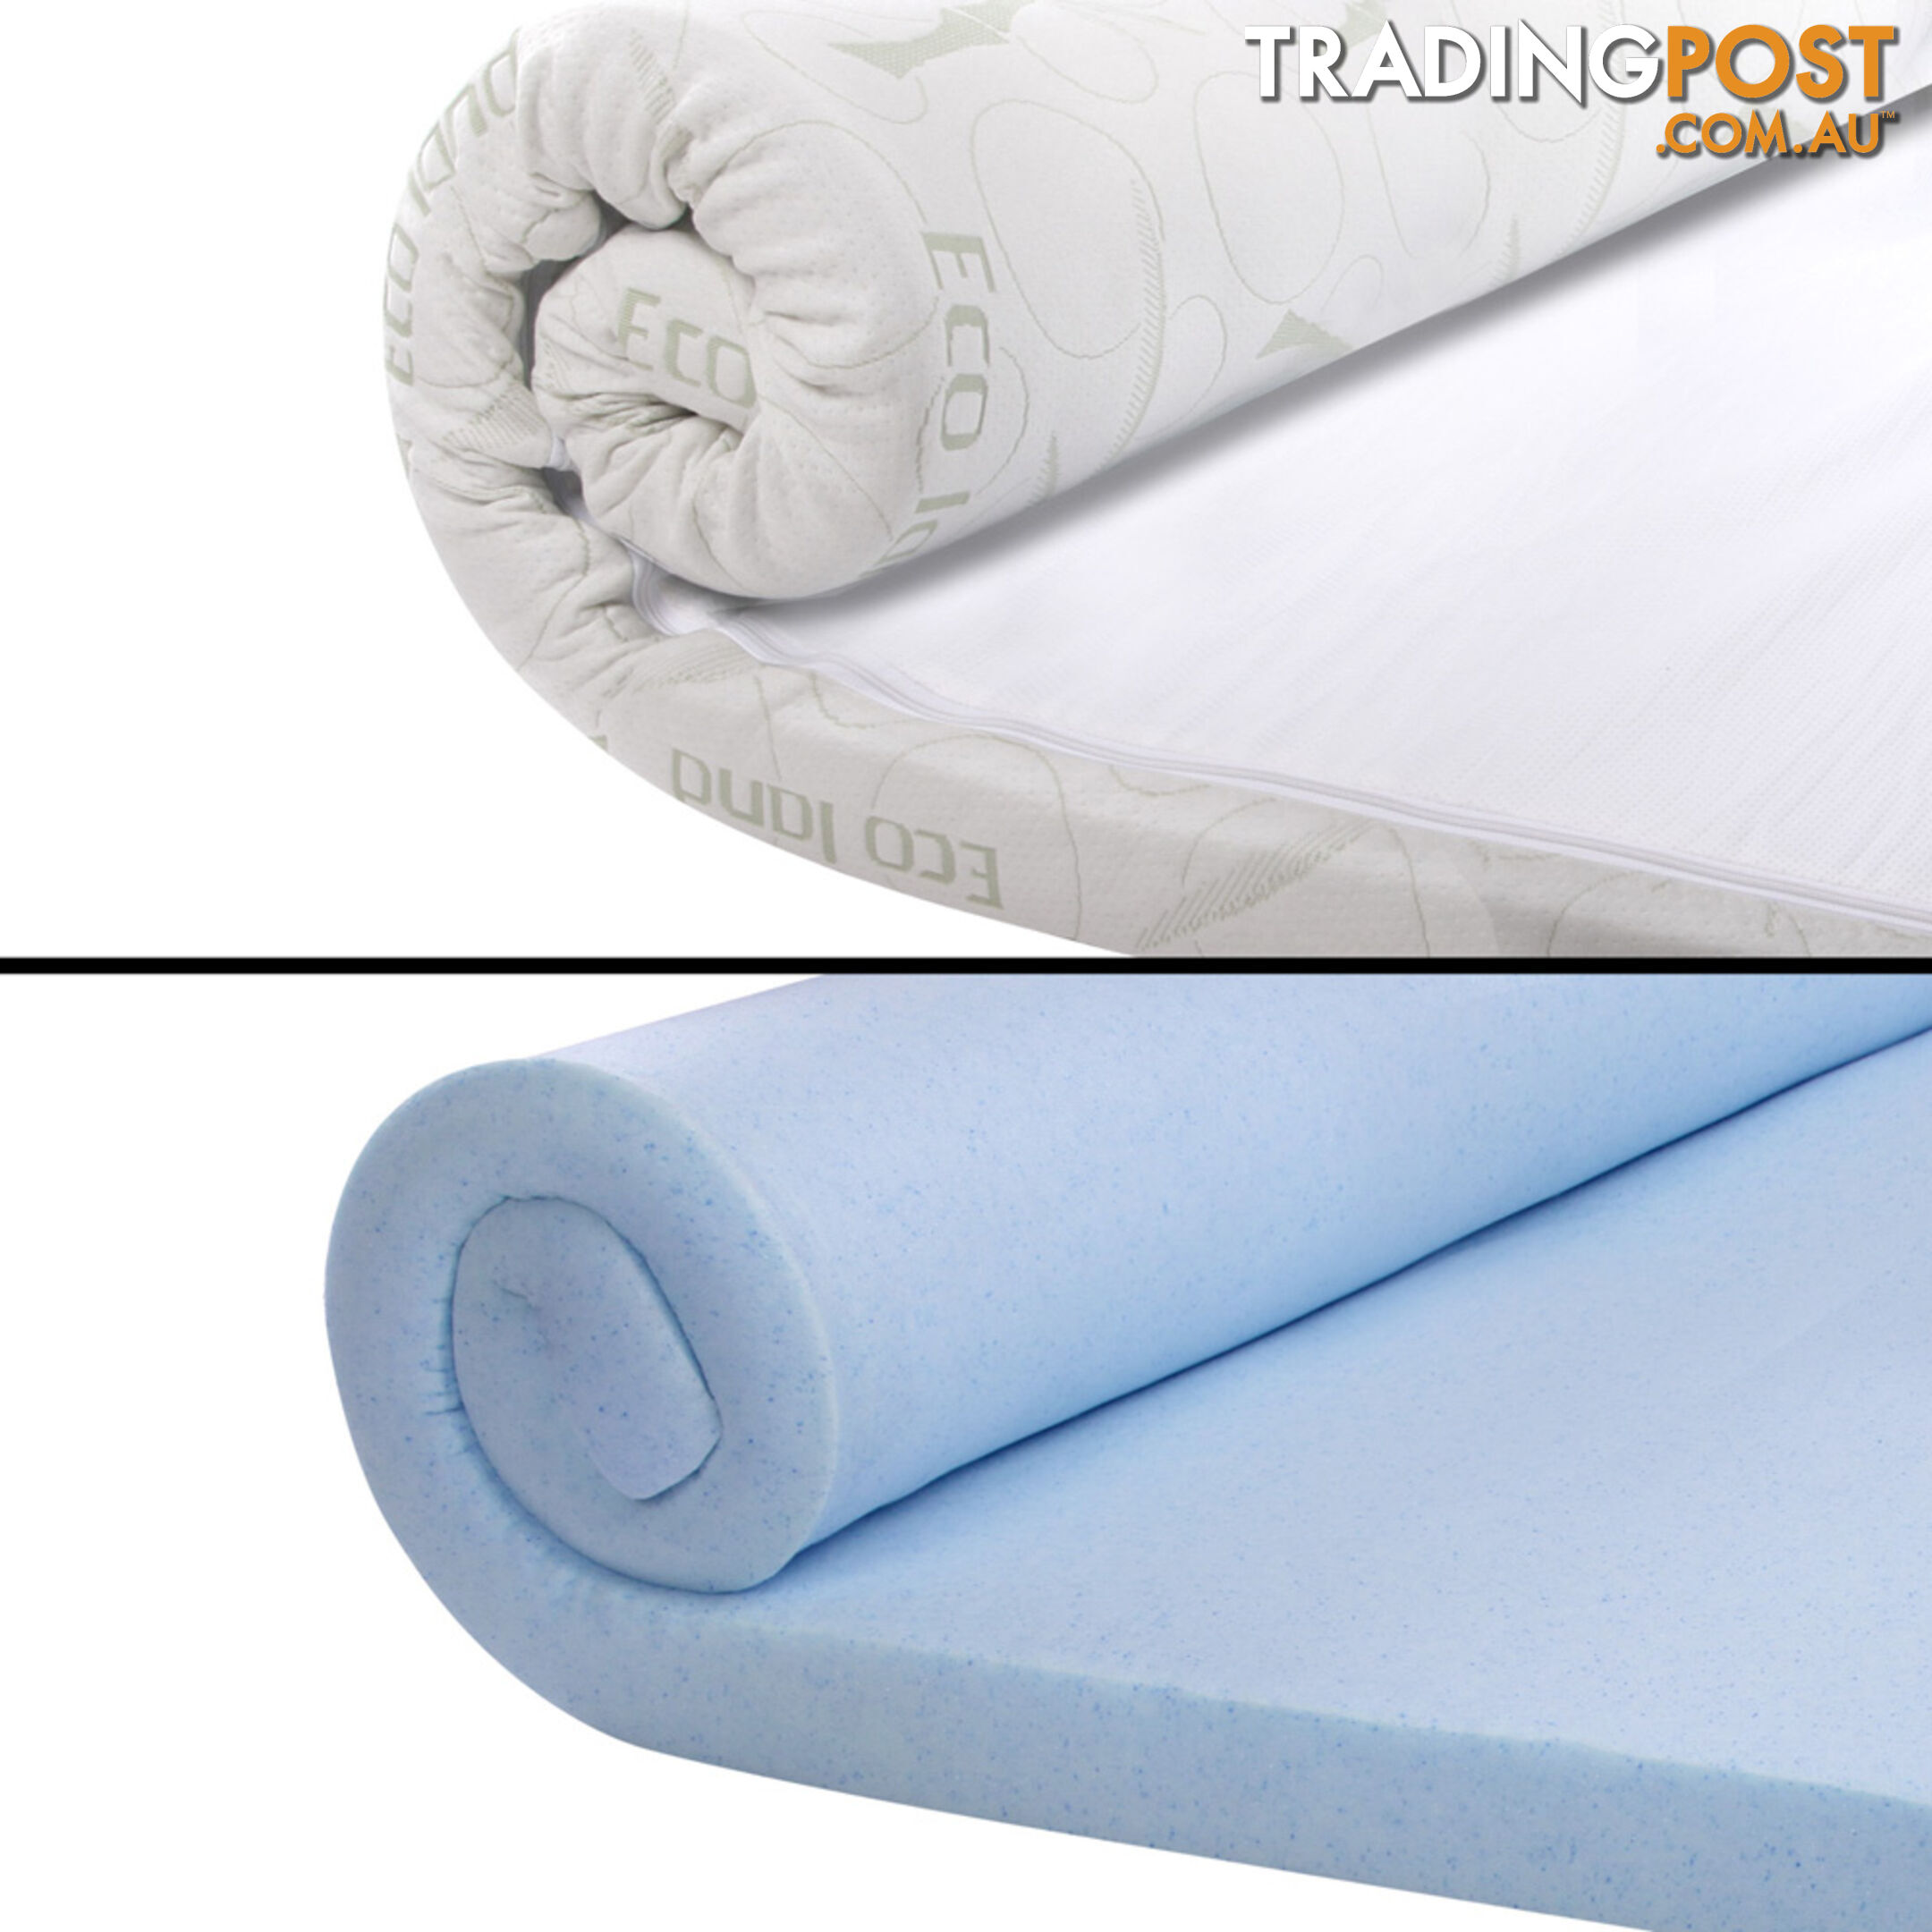 Cool Gel Memory Foam Mattress Topper w/ Bamboo Fabric Cover 8cm King